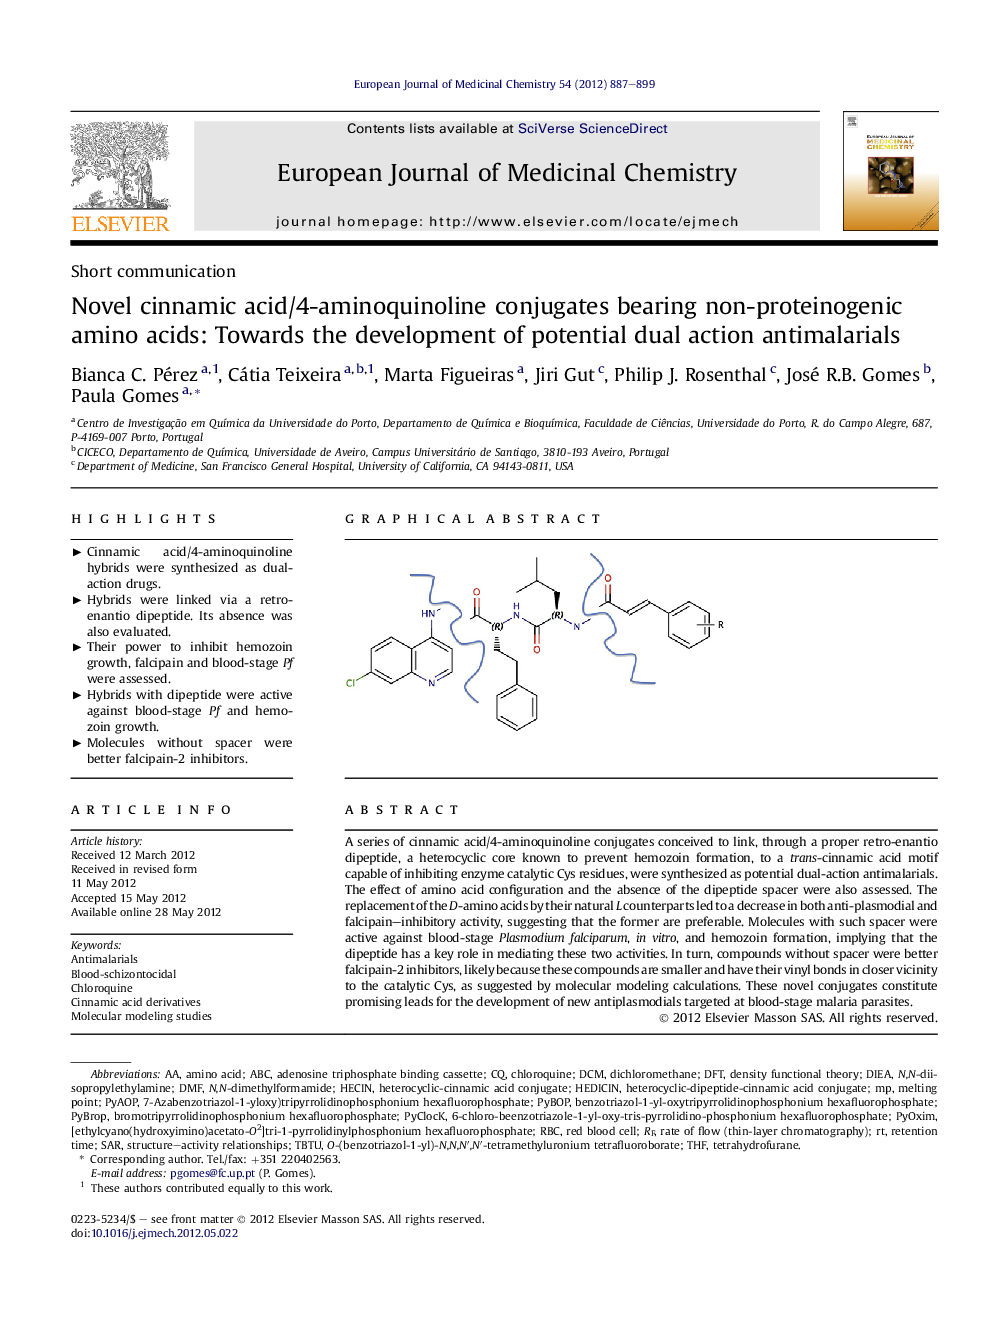 Novel cinnamic acid/4-aminoquinoline conjugates bearing non-proteinogenic amino acids: Towards the development of potential dual action antimalarials